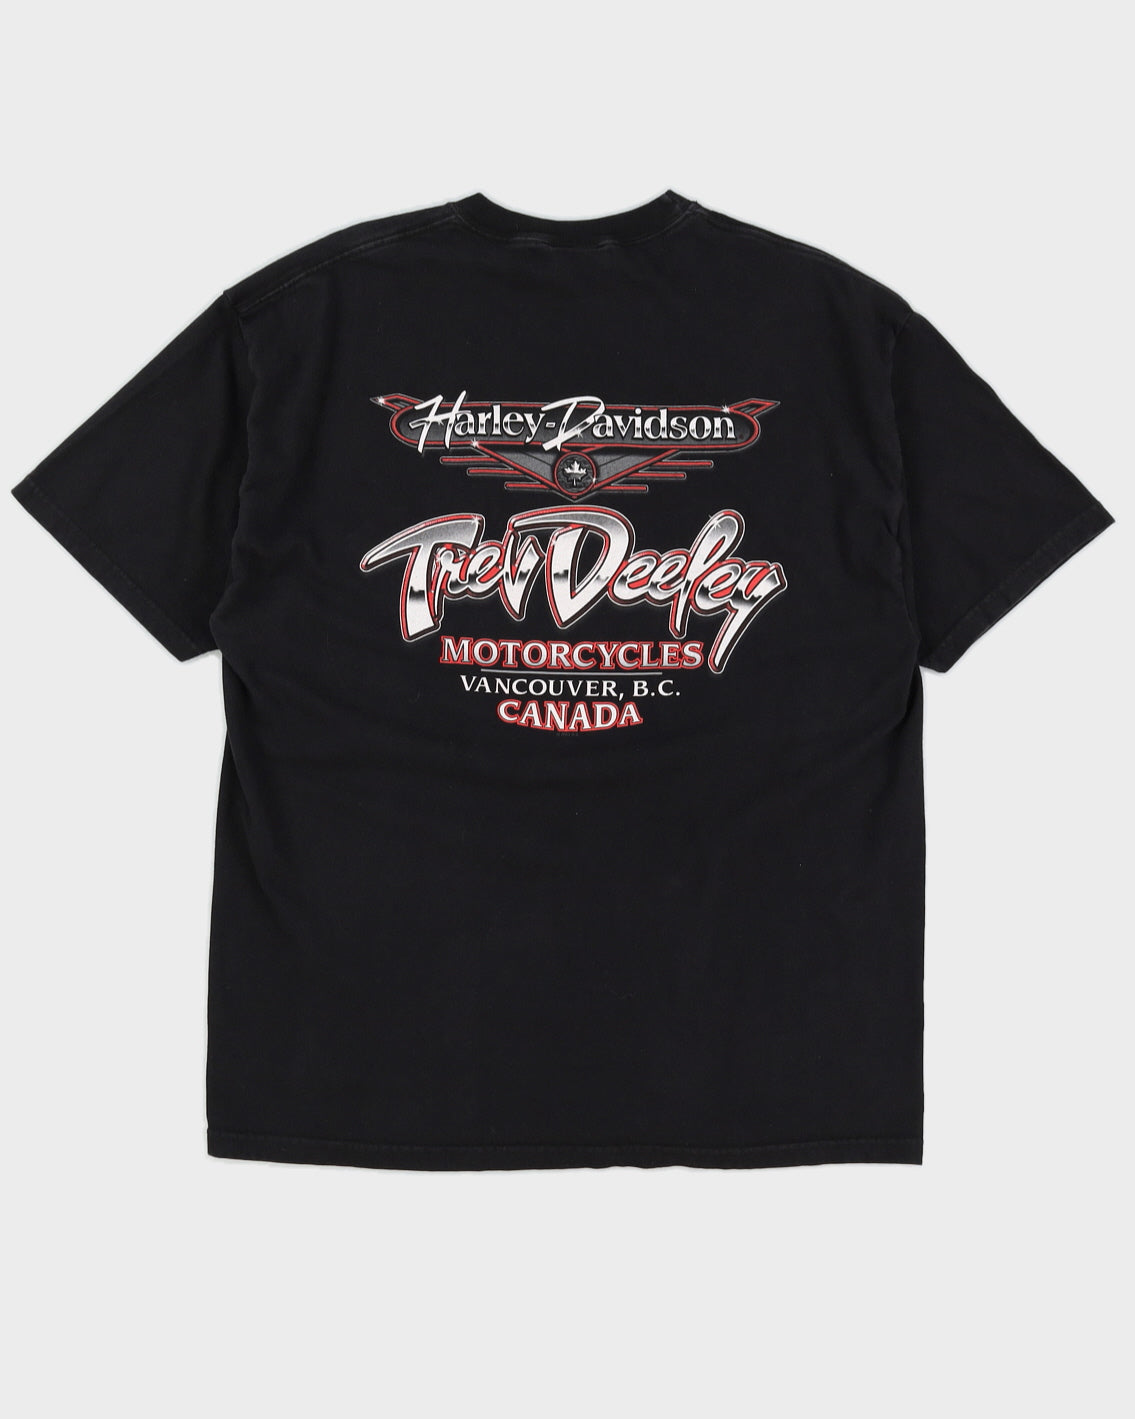 00s Harley Davidson Trev Deeley Print - XL